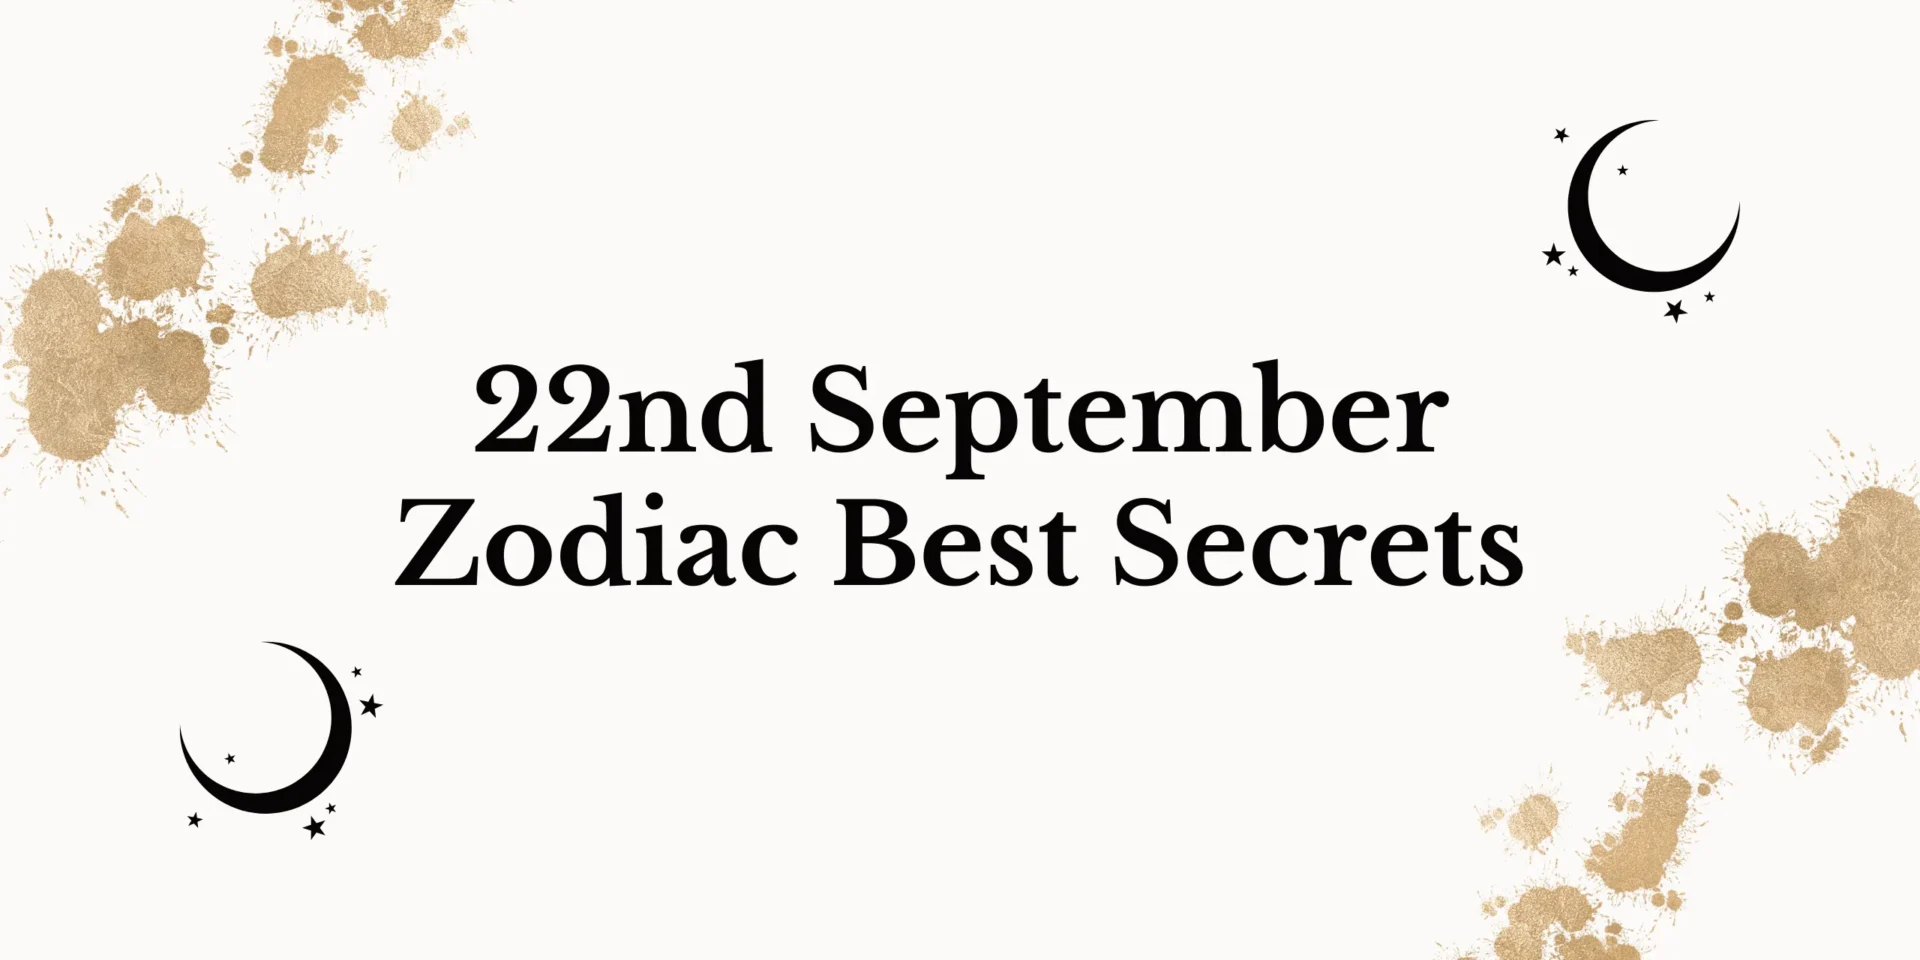 22nd September Zodiac Best Secrets